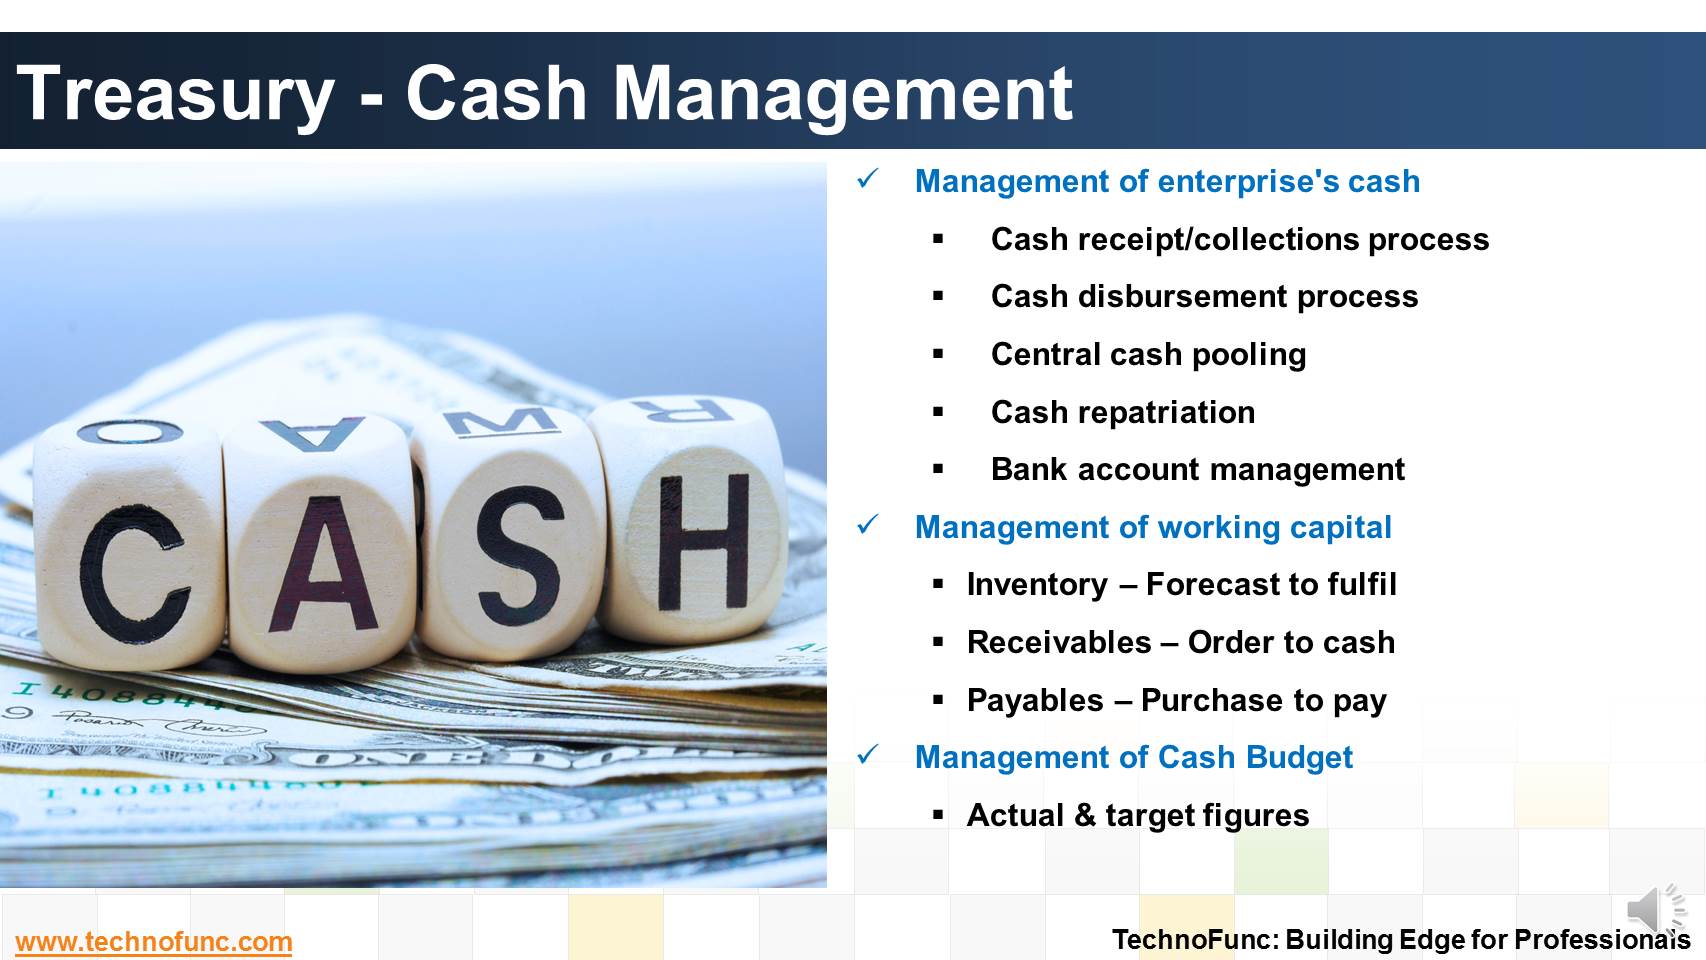 TechnoFunc - Treasury - Cash Management